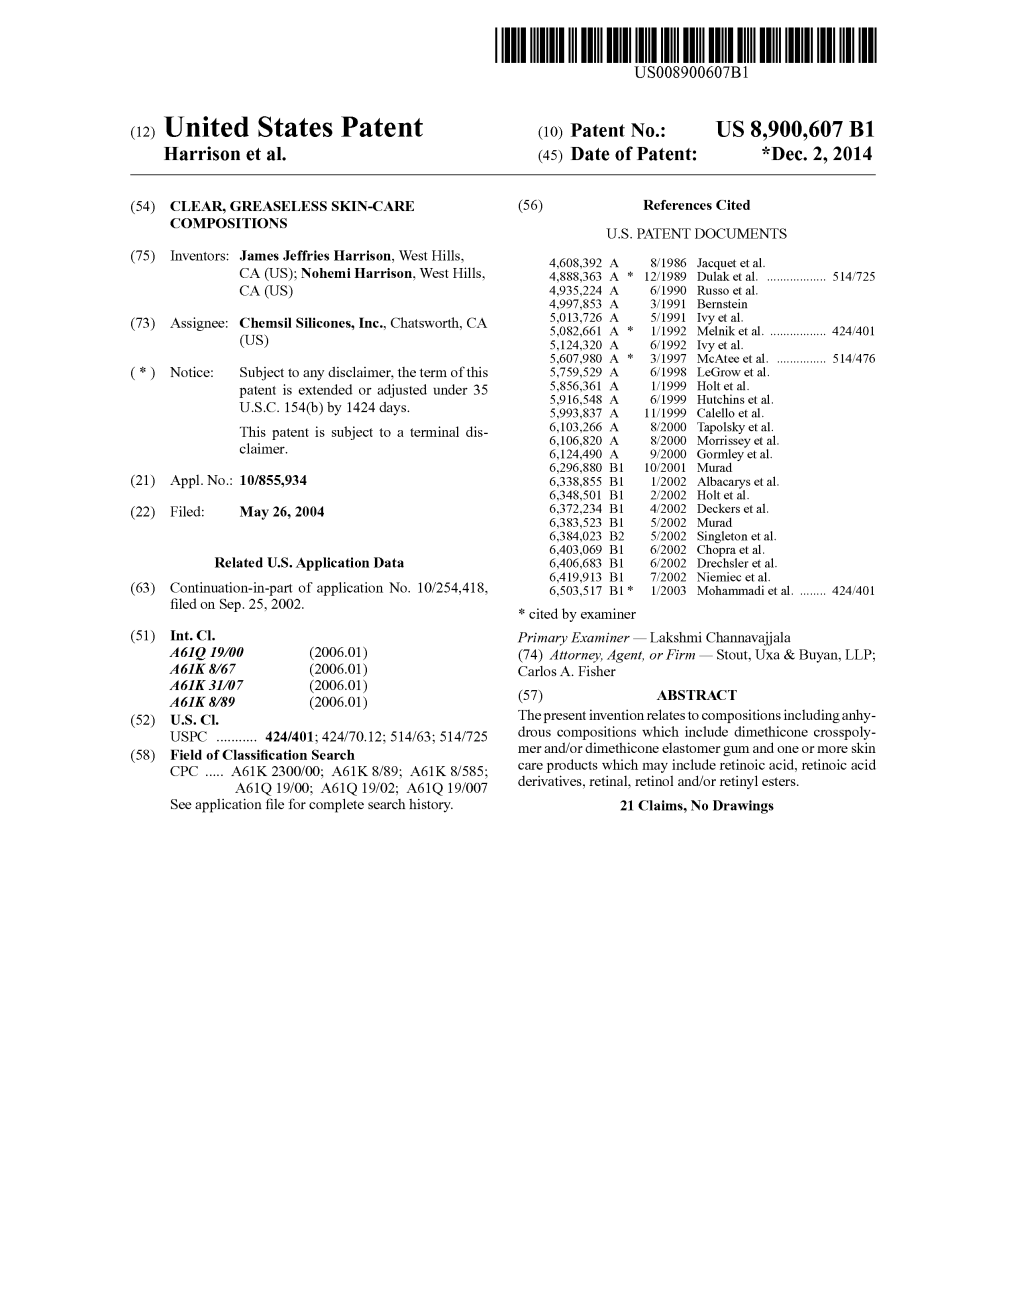 (12) United States Patent (10) Patent No.: US 8,900,607 B1 Harrison Et Al